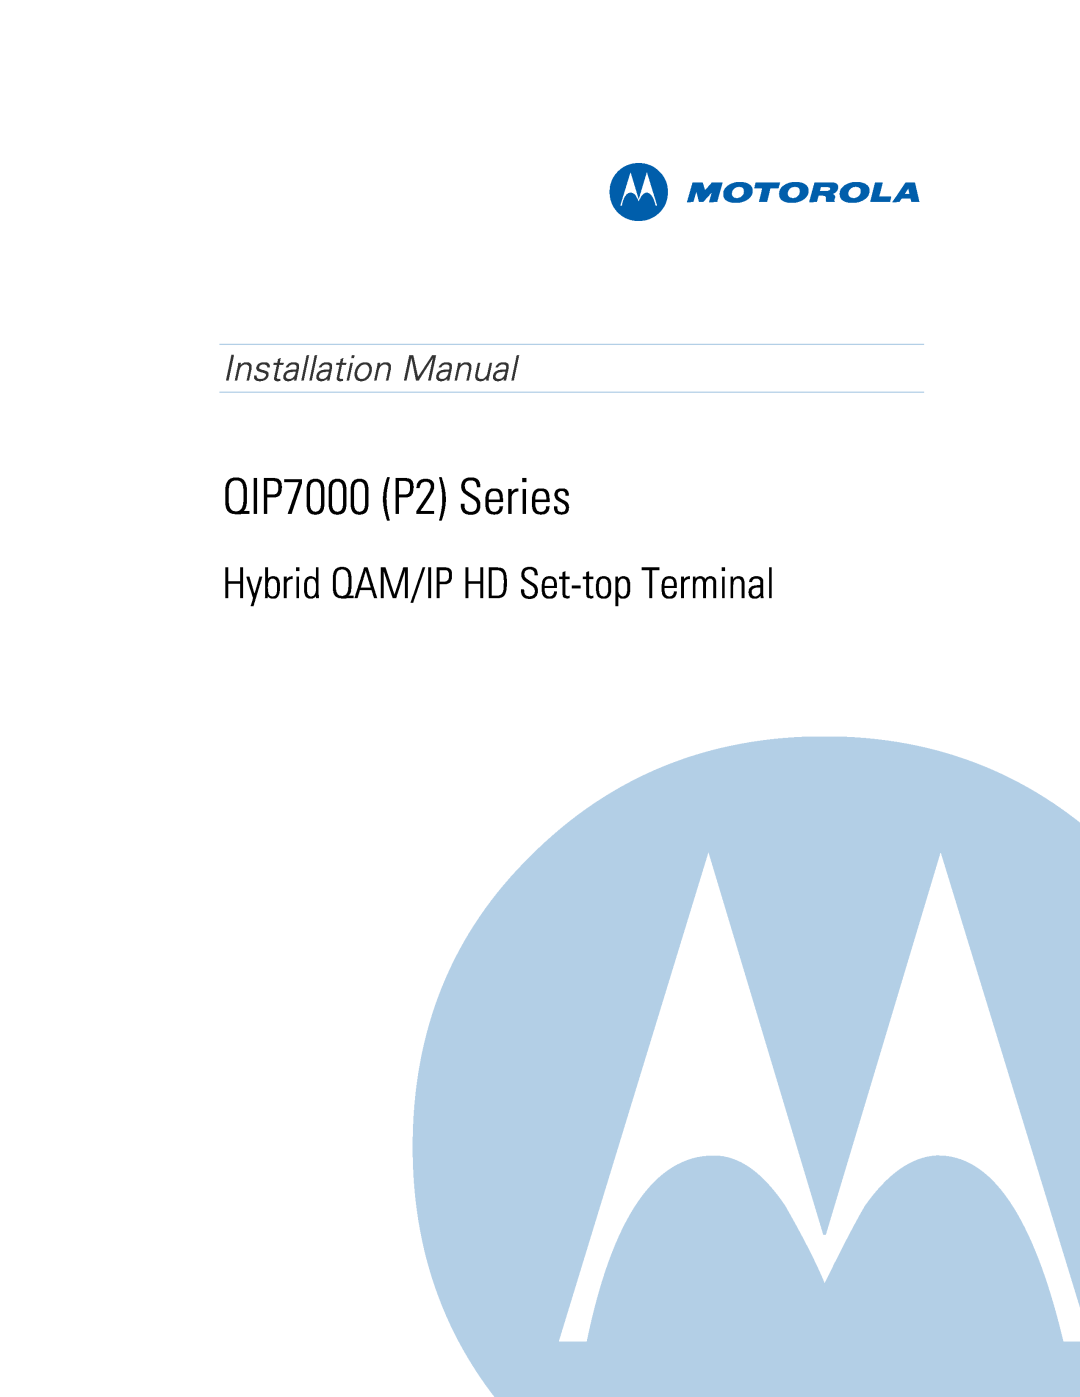 Motorola installation manual QIP7000 P2 Series, Hybrid QAM/IP HD Set-top Terminal, Installation Manual 